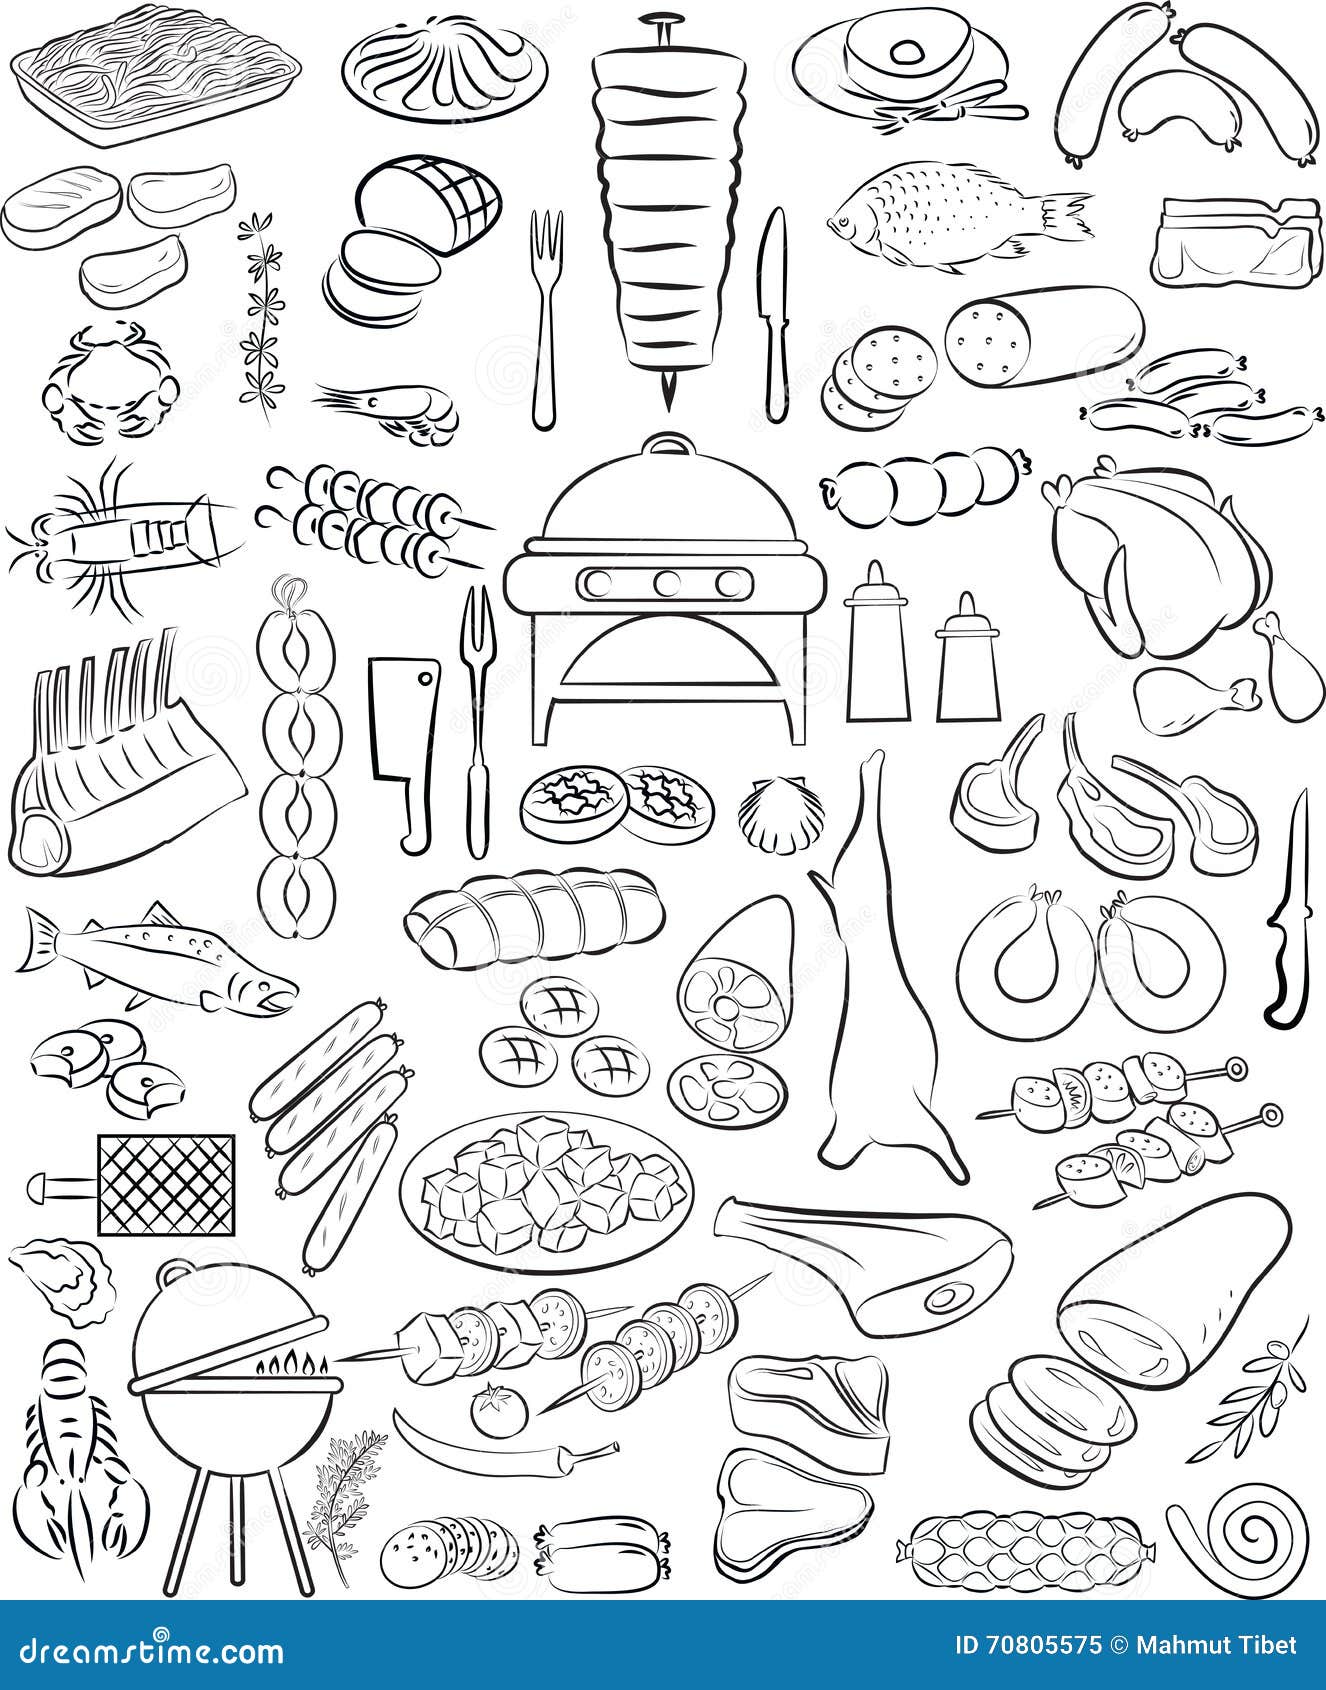 Meat set. Vector illustration of hand drawn meat elements set in line art mode